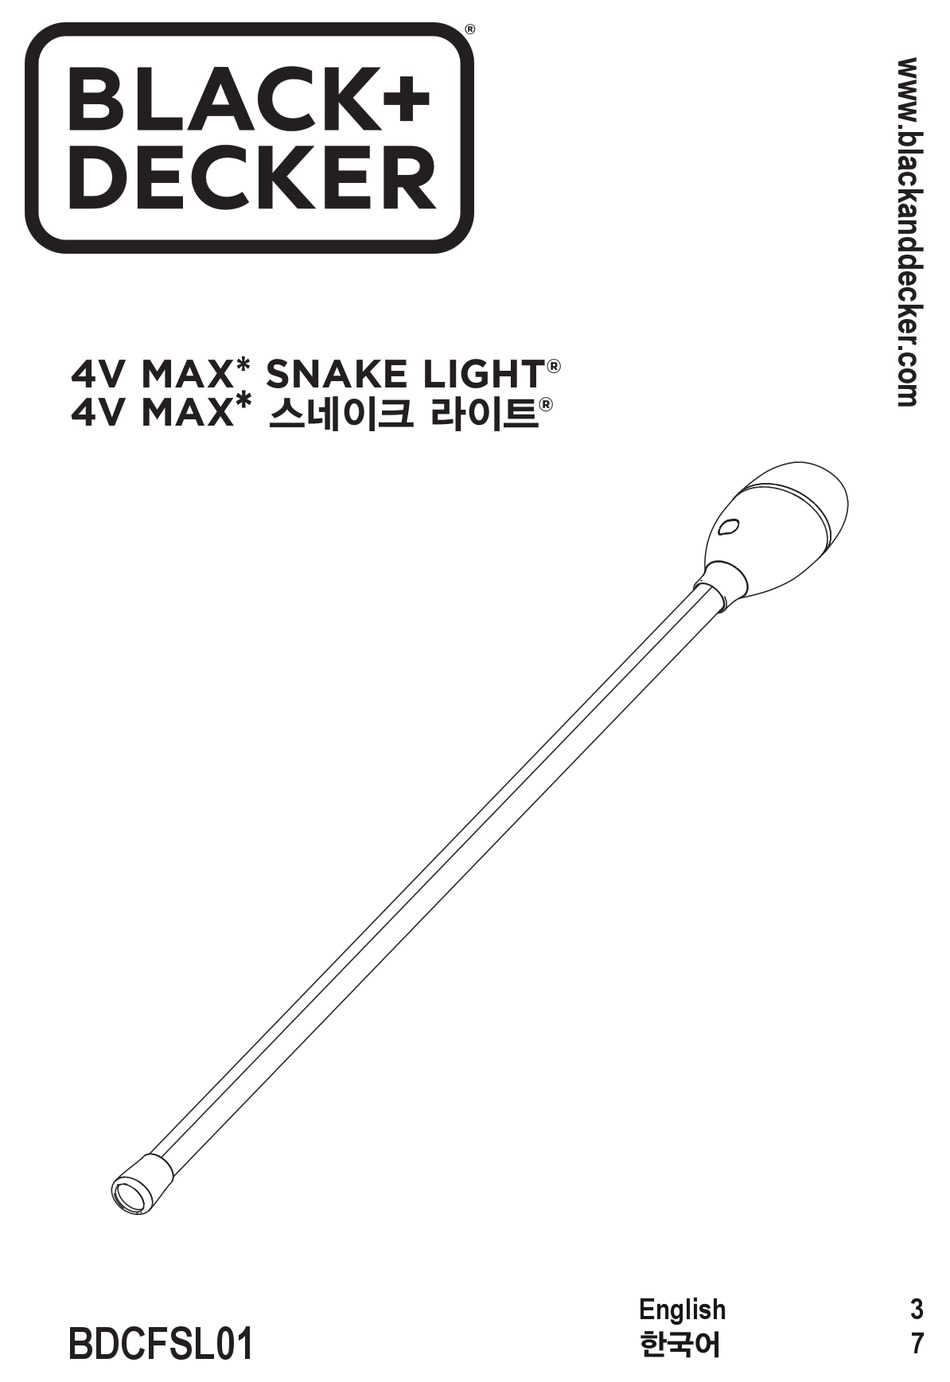 BLACK DECKER LEDUC9-1CCT-ACK Smart Under Cabinet Lighting User Guide